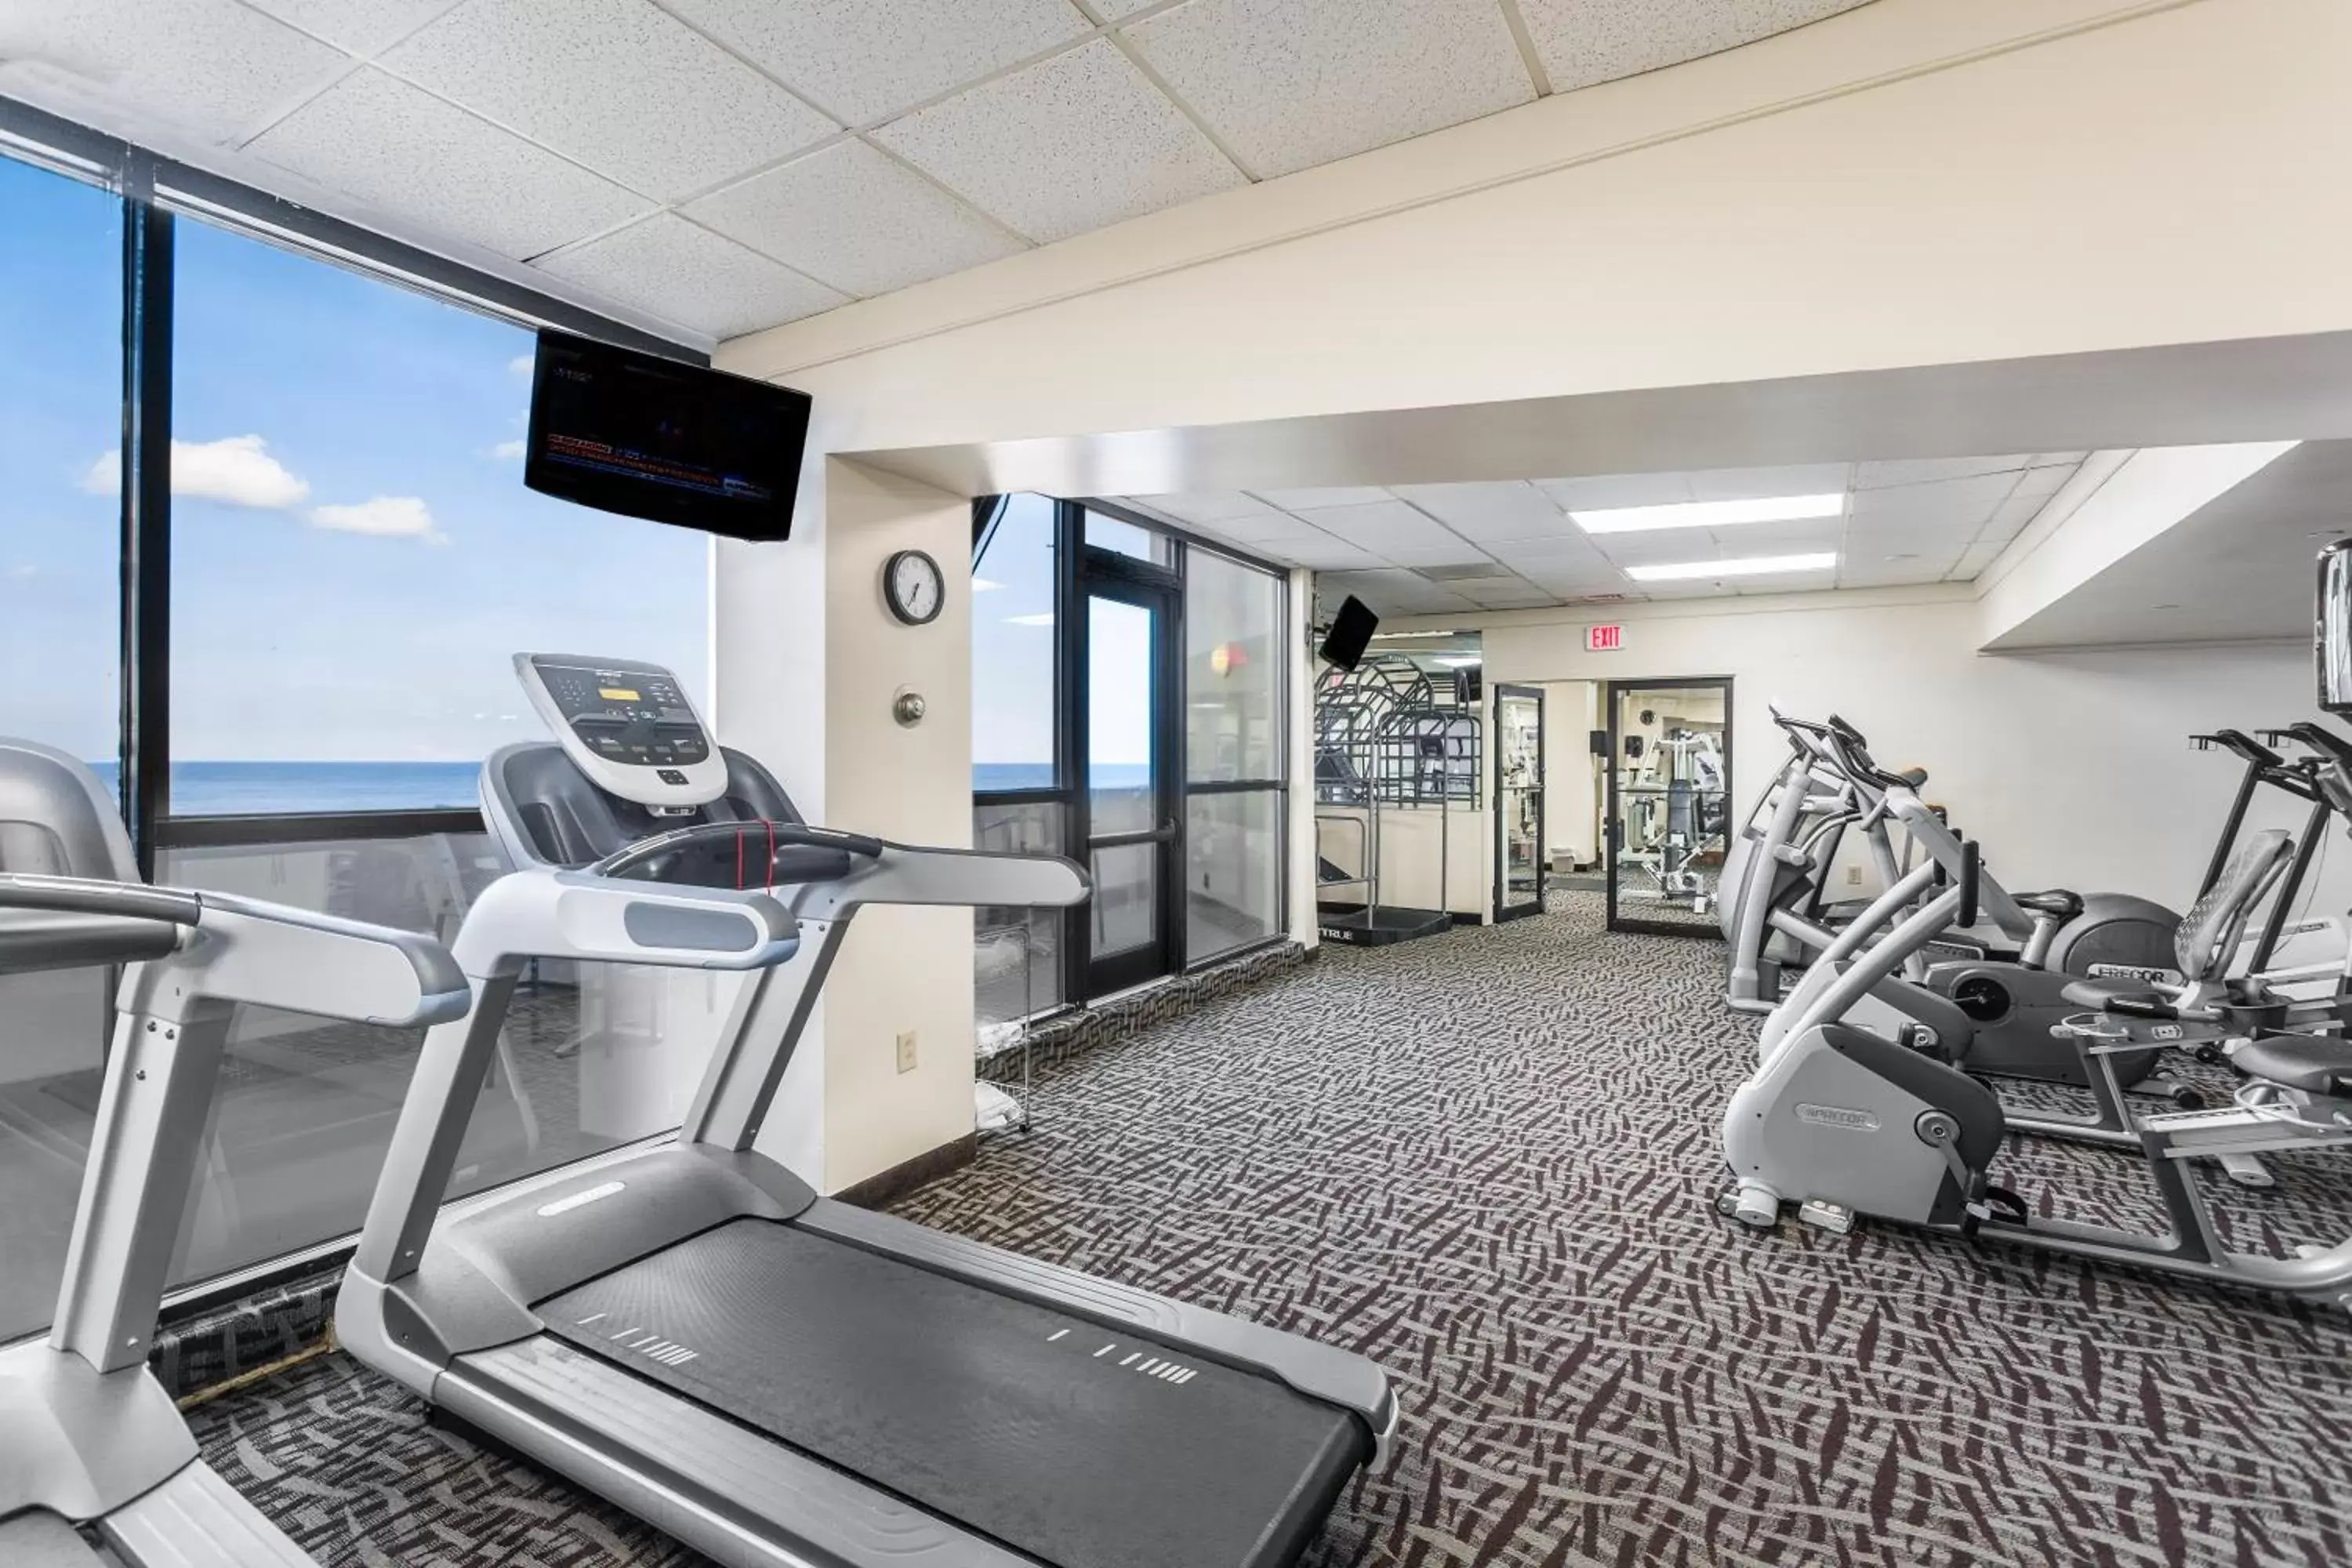 Fitness centre/facilities, Fitness Center/Facilities in Beach Quarters Resort